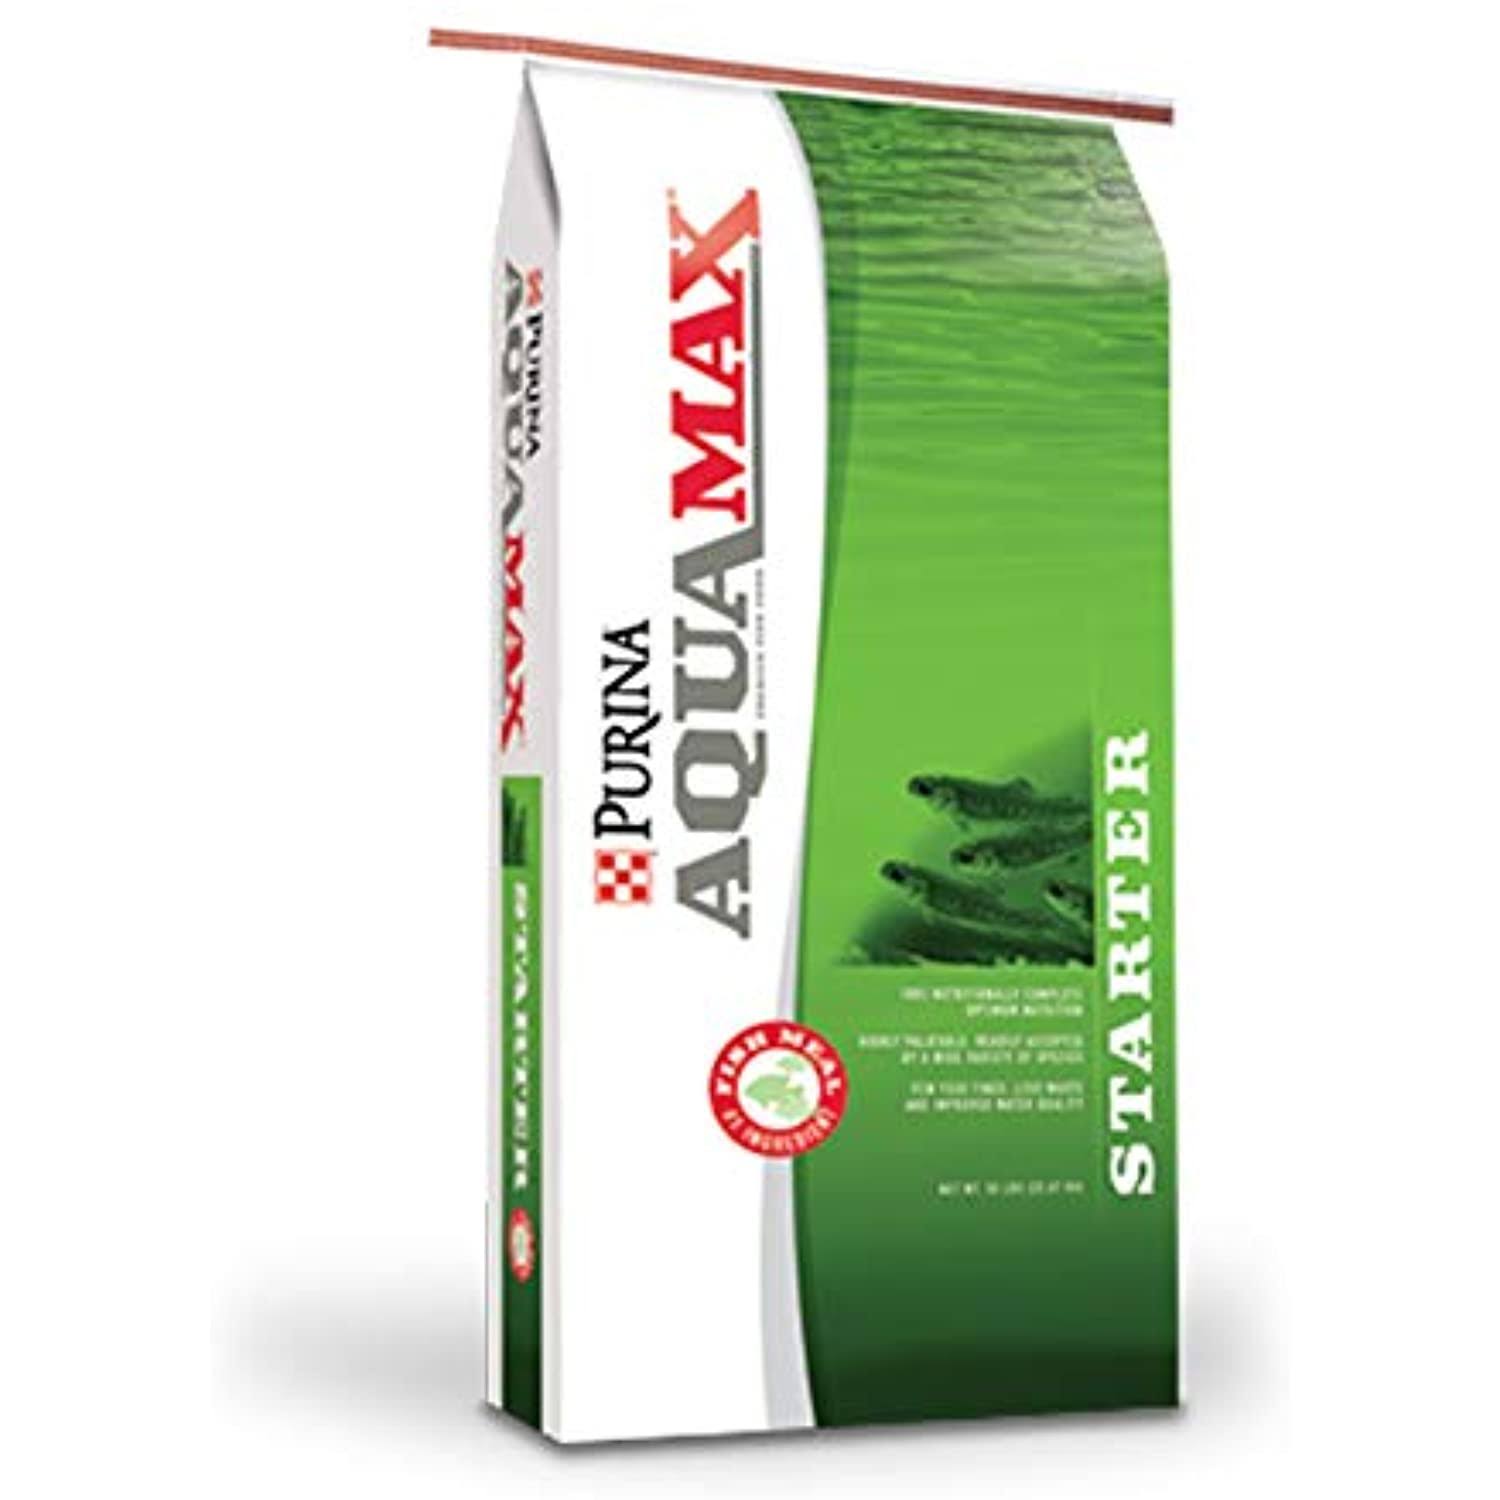 Purina AquaMax Grower 400 50 lb Bag